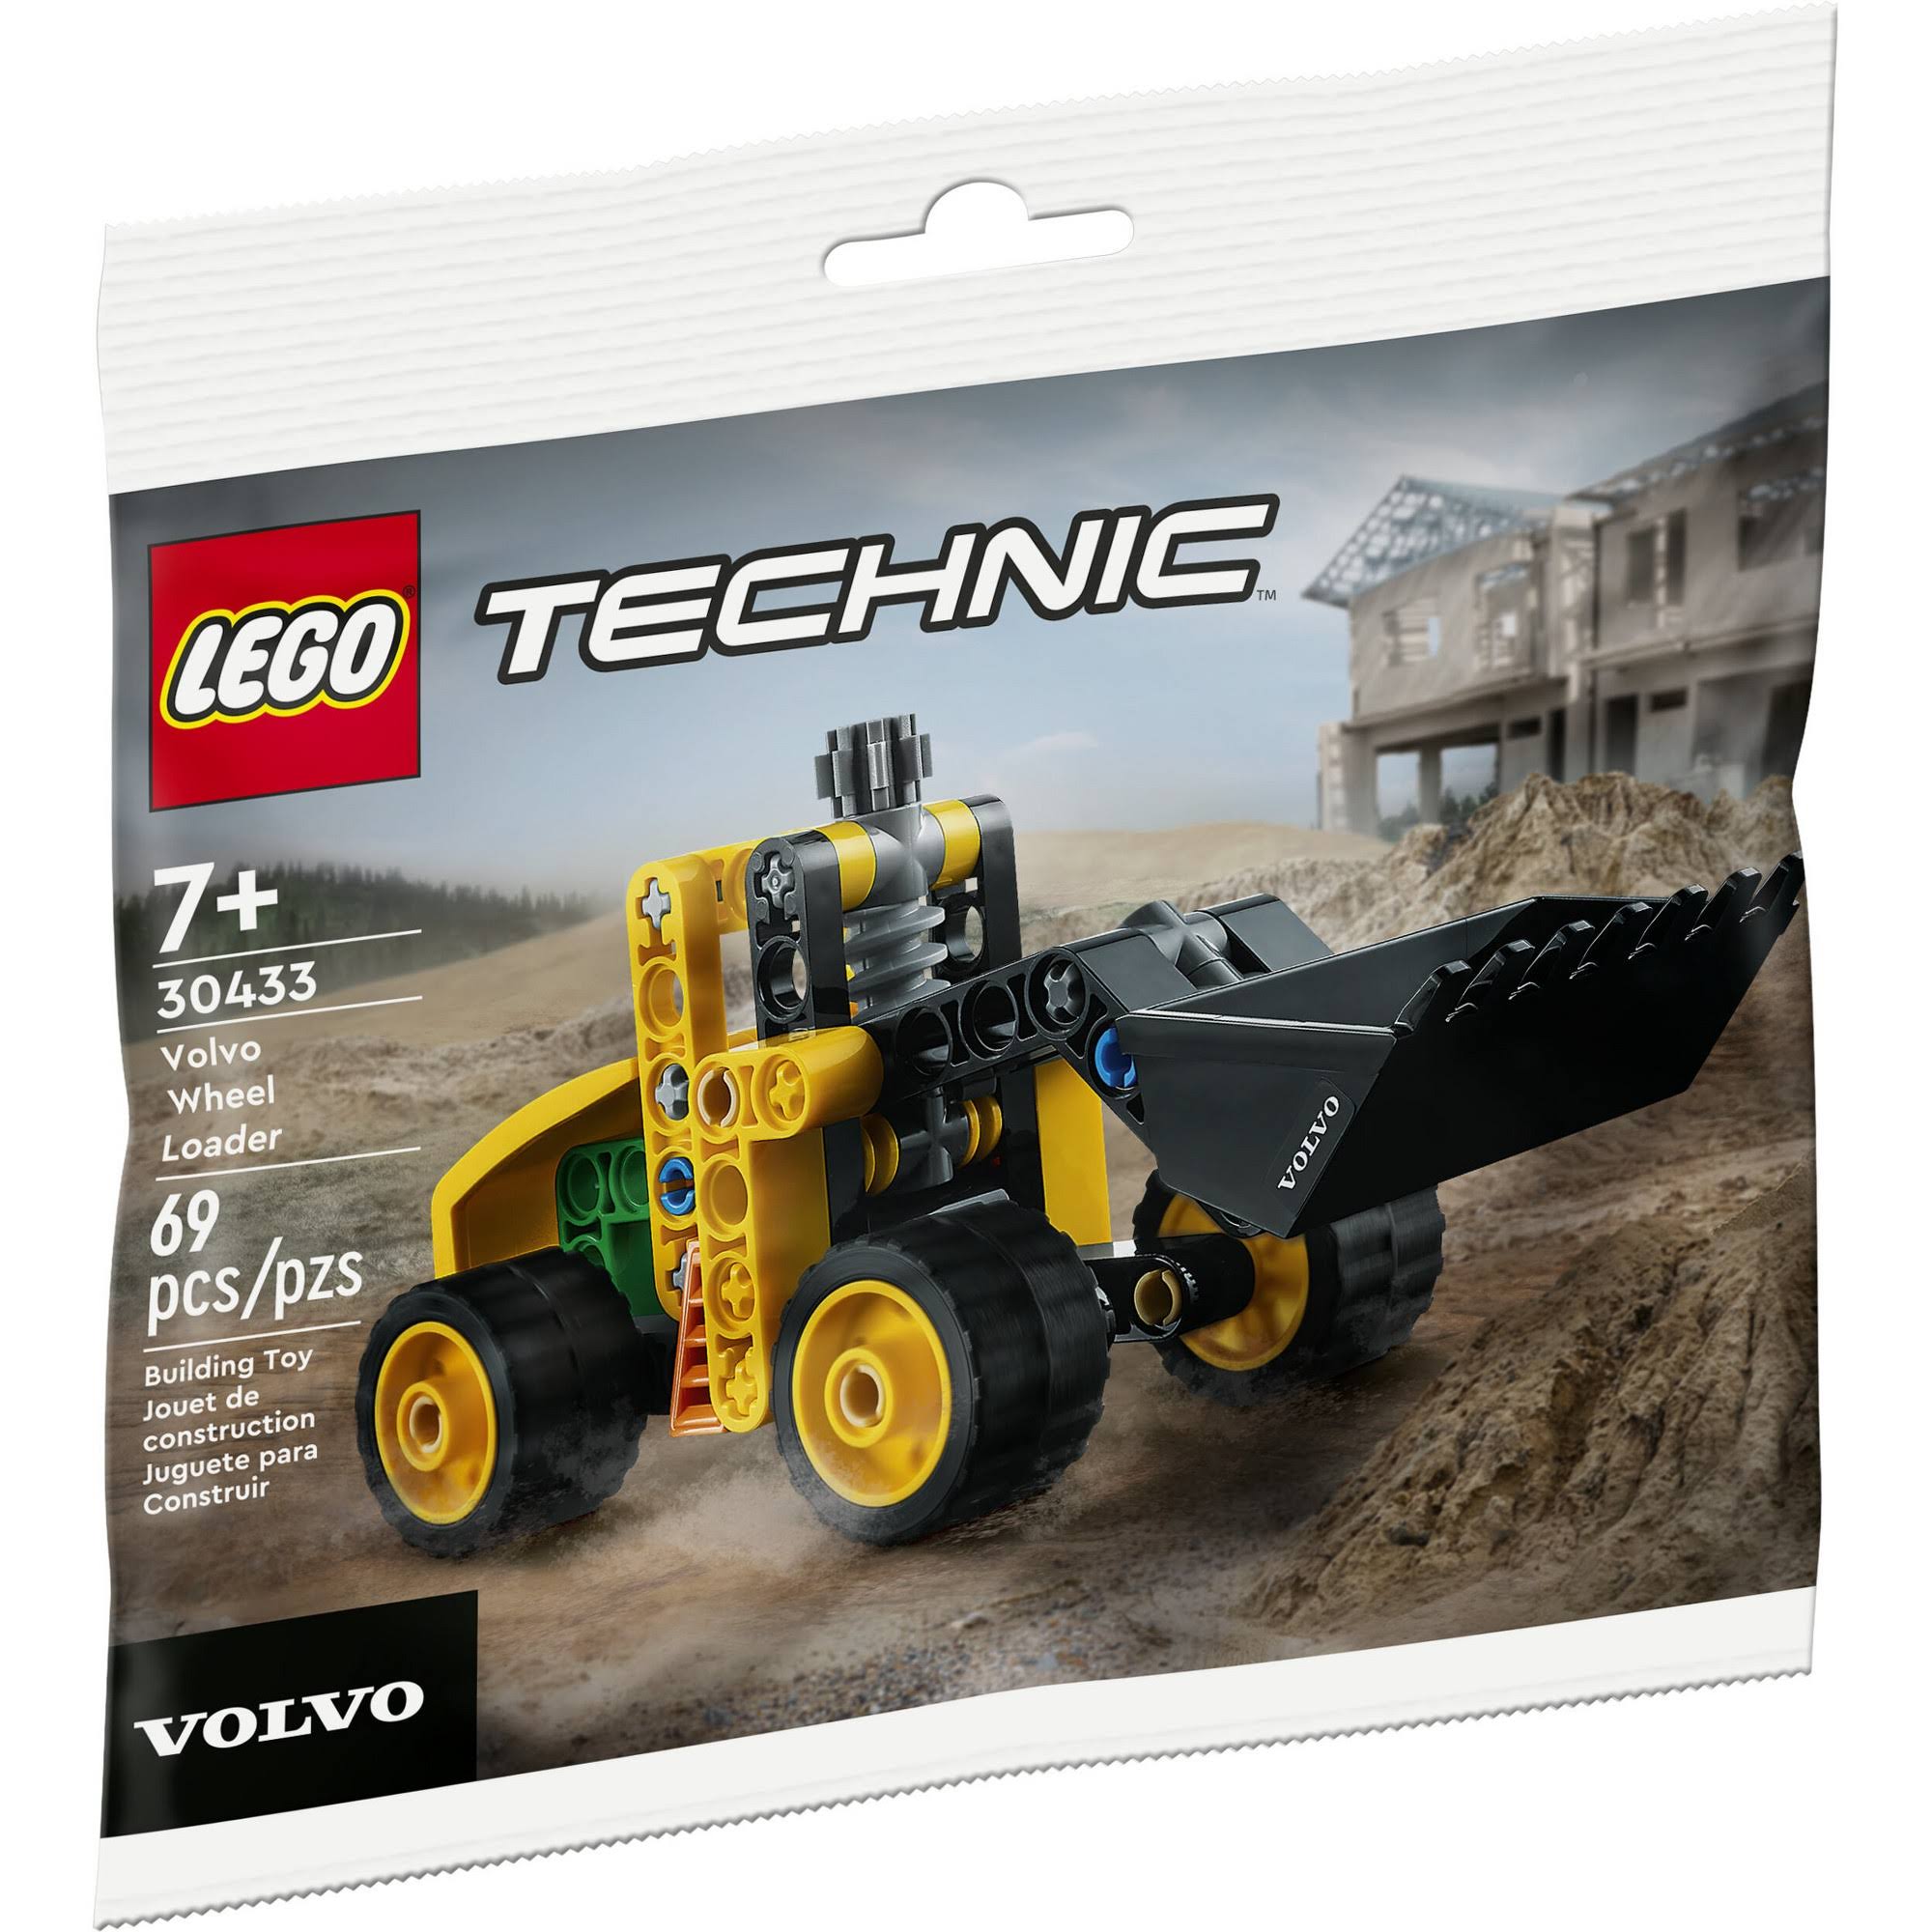 LEGO 30433 Volvo Wheel Loader polybag